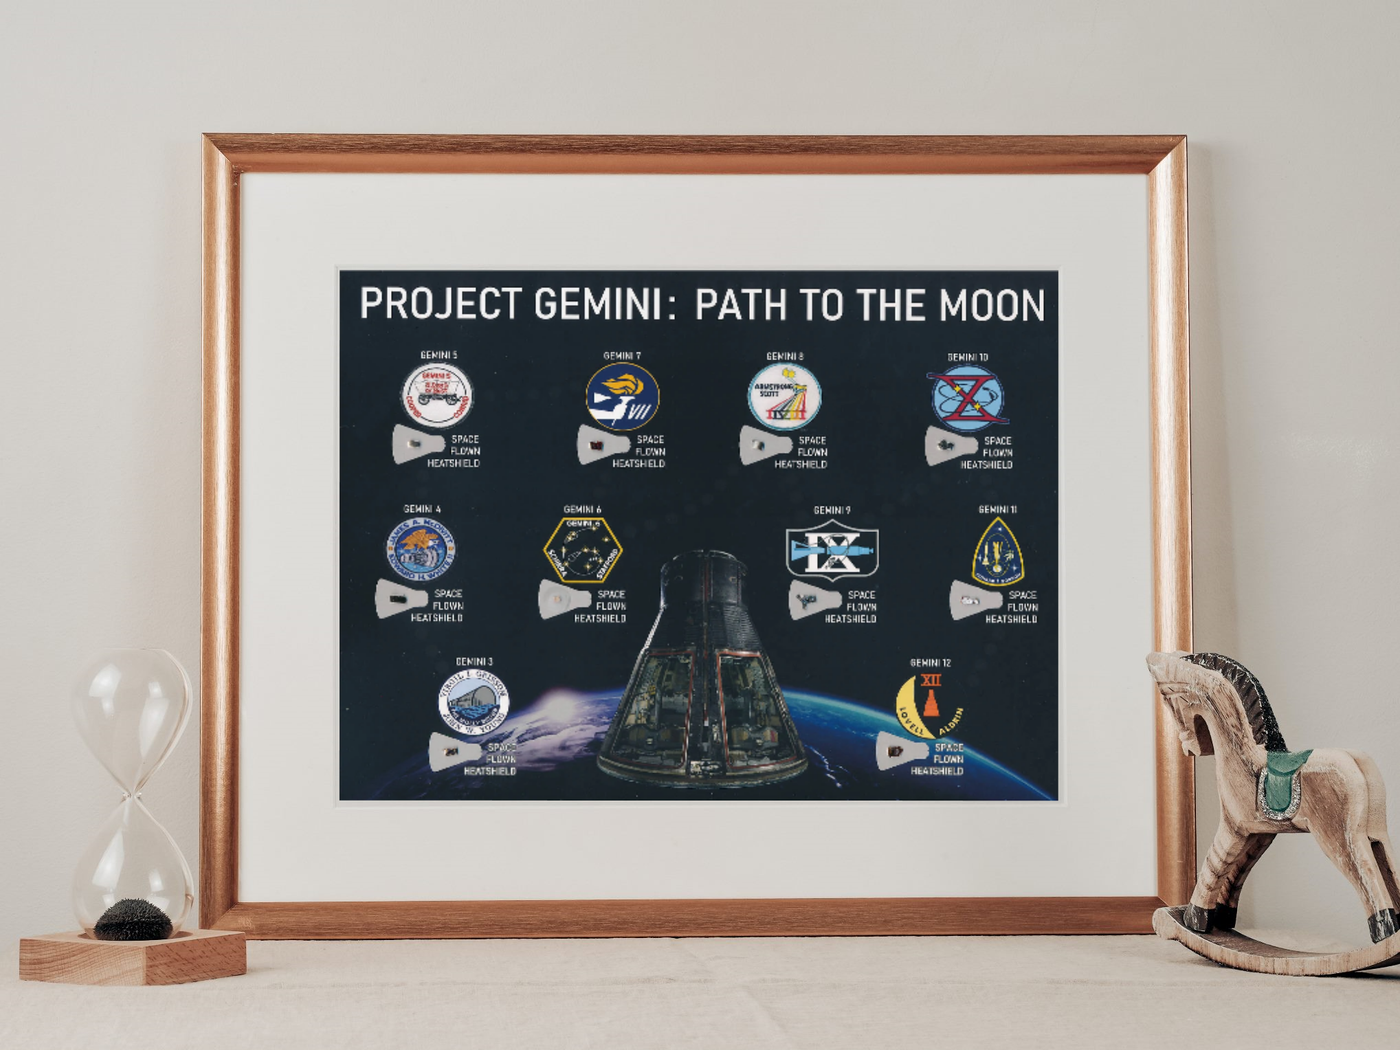 Gemini 3-12 space flown heatshield artifact presentation